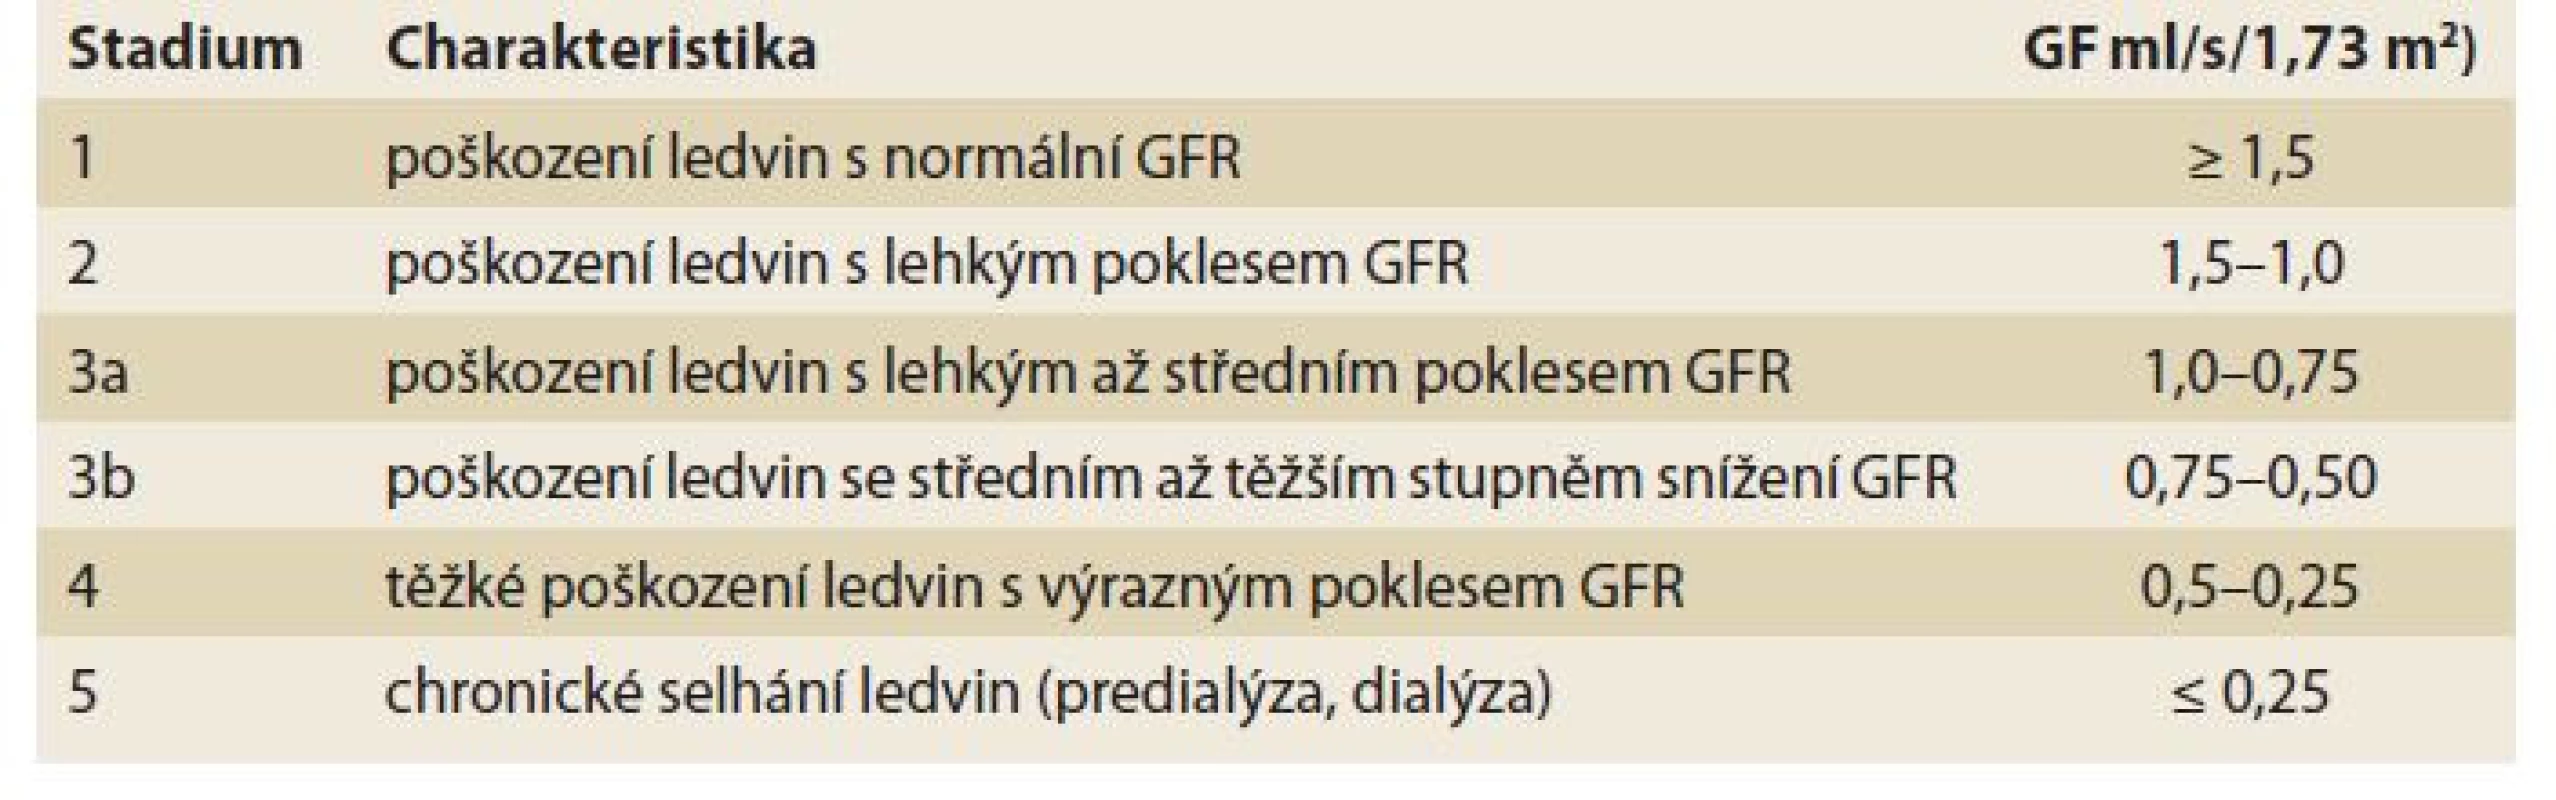 Stadia chronického onemocnění ledvin (CKD).<br>
Tab. 1. Stages of chronic kidney disease (CKD).